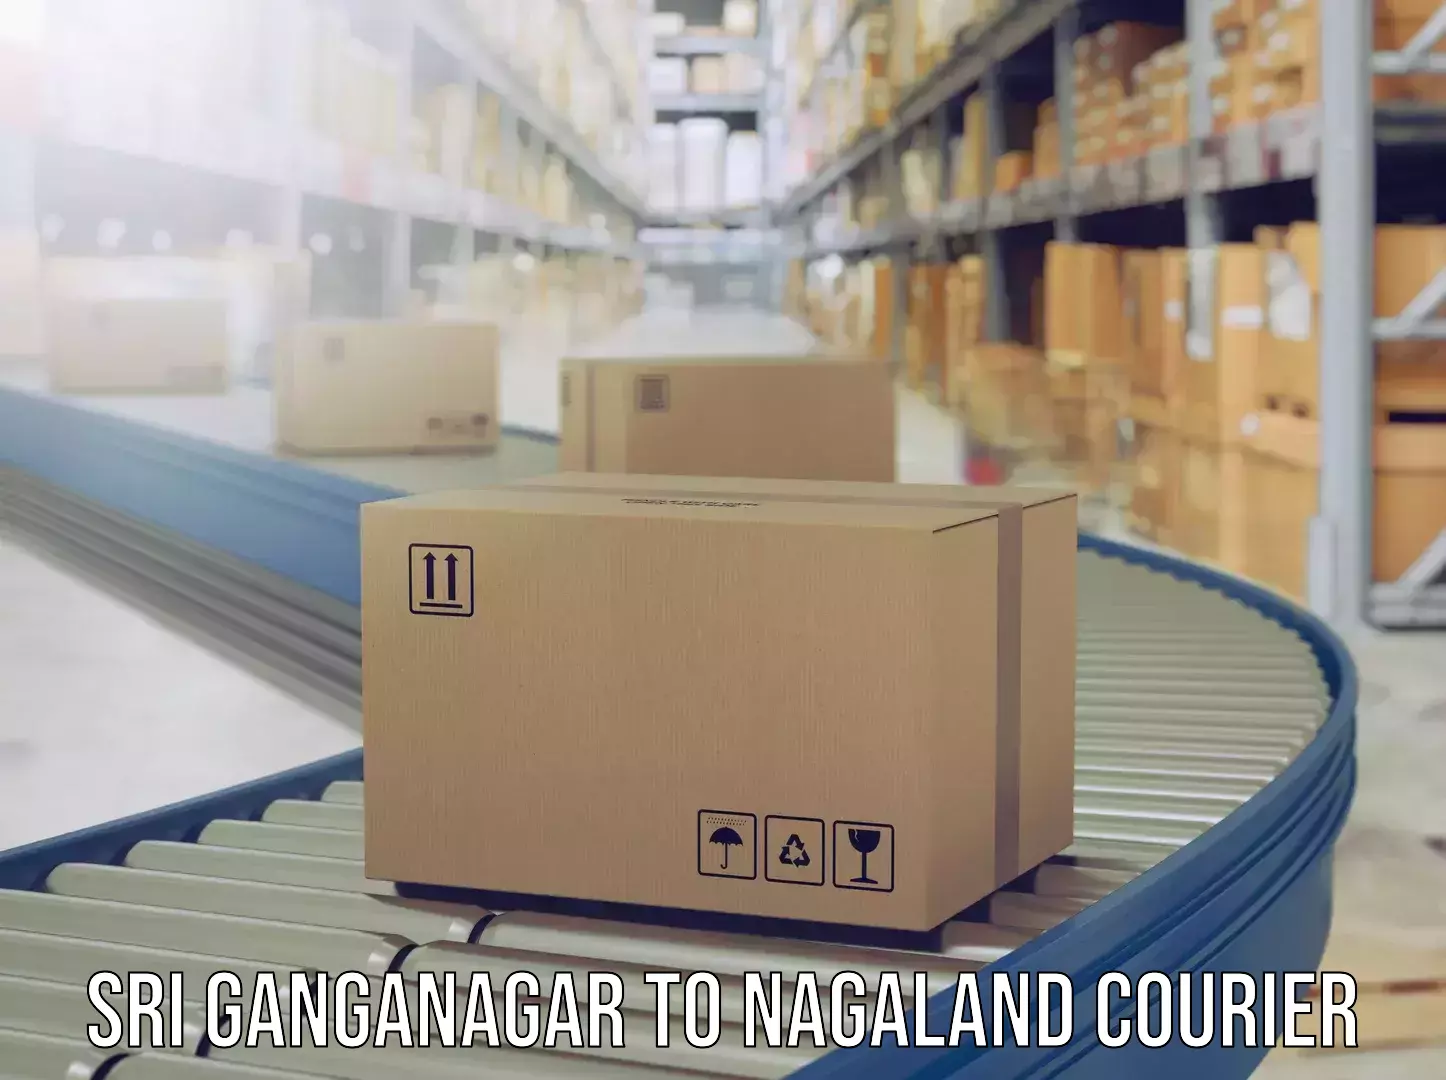 Luggage delivery system Sri Ganganagar to Nagaland